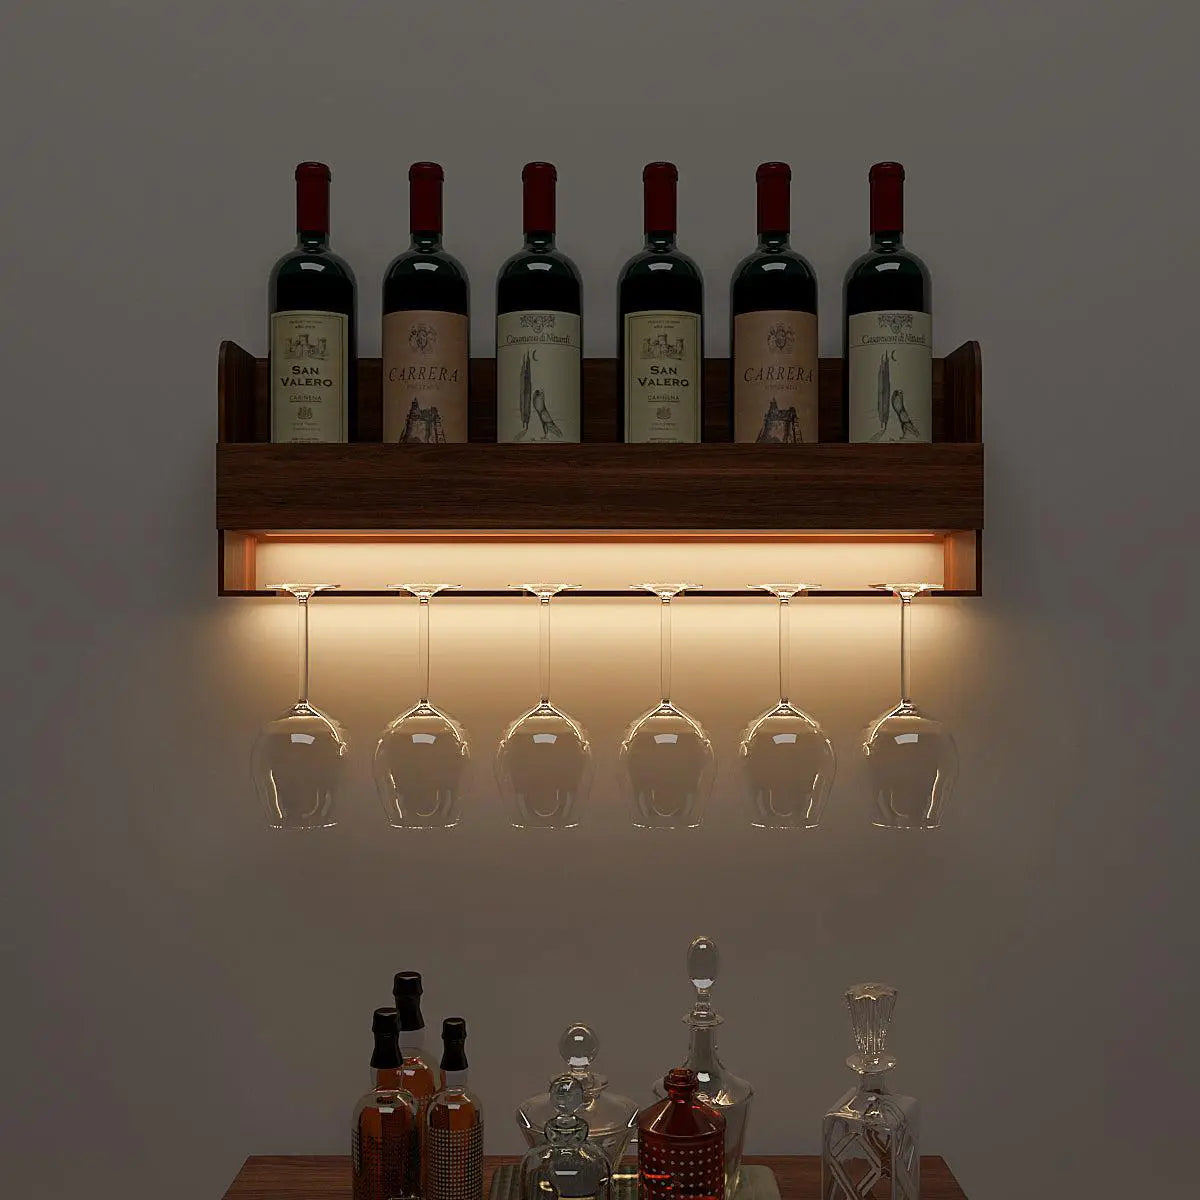 " Engineered Wood Backlit Bar Wall Shelf / Mini Bar Cabinet in Walnut Finish"